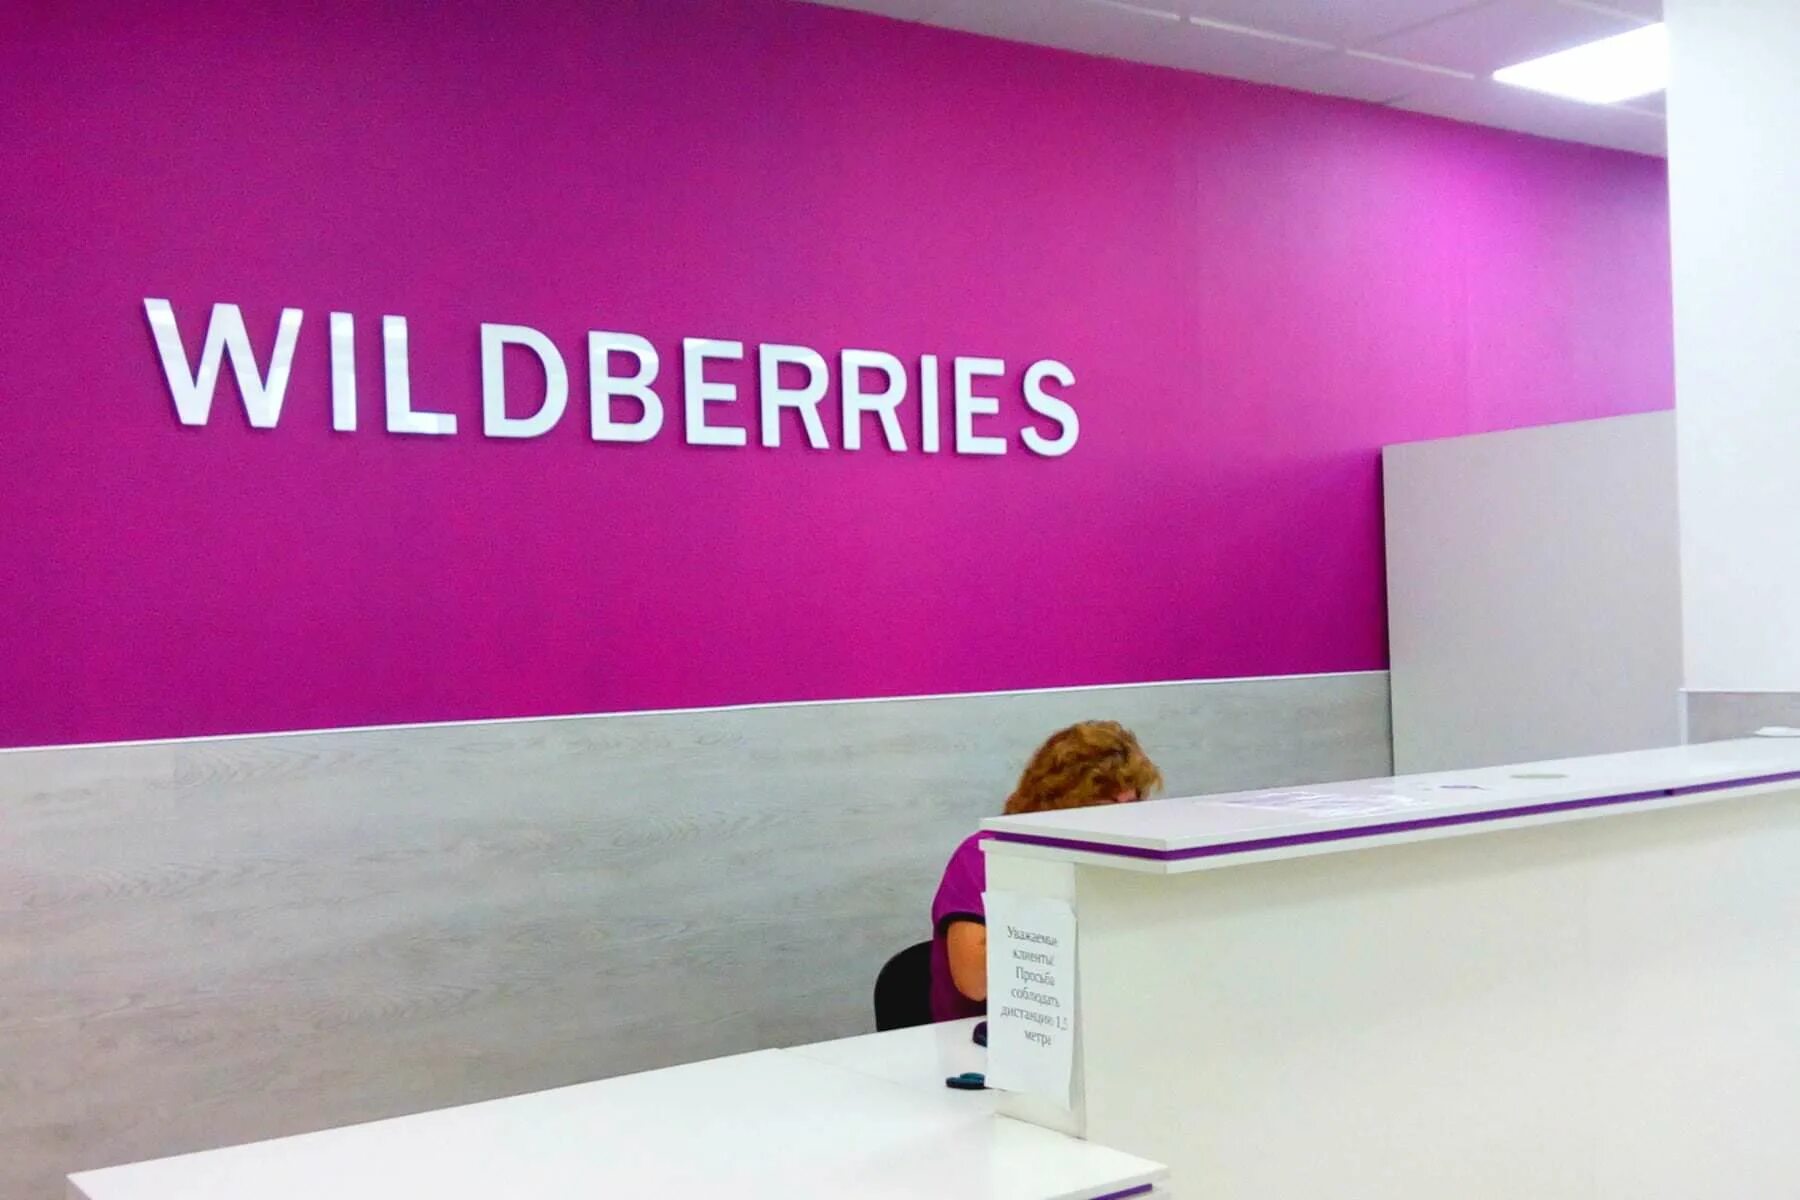 Госдума вайлдберриз. Вайлдберриз. Wildberries офис. Wildberries интернет магазин. Логотип магазина Wildberries.